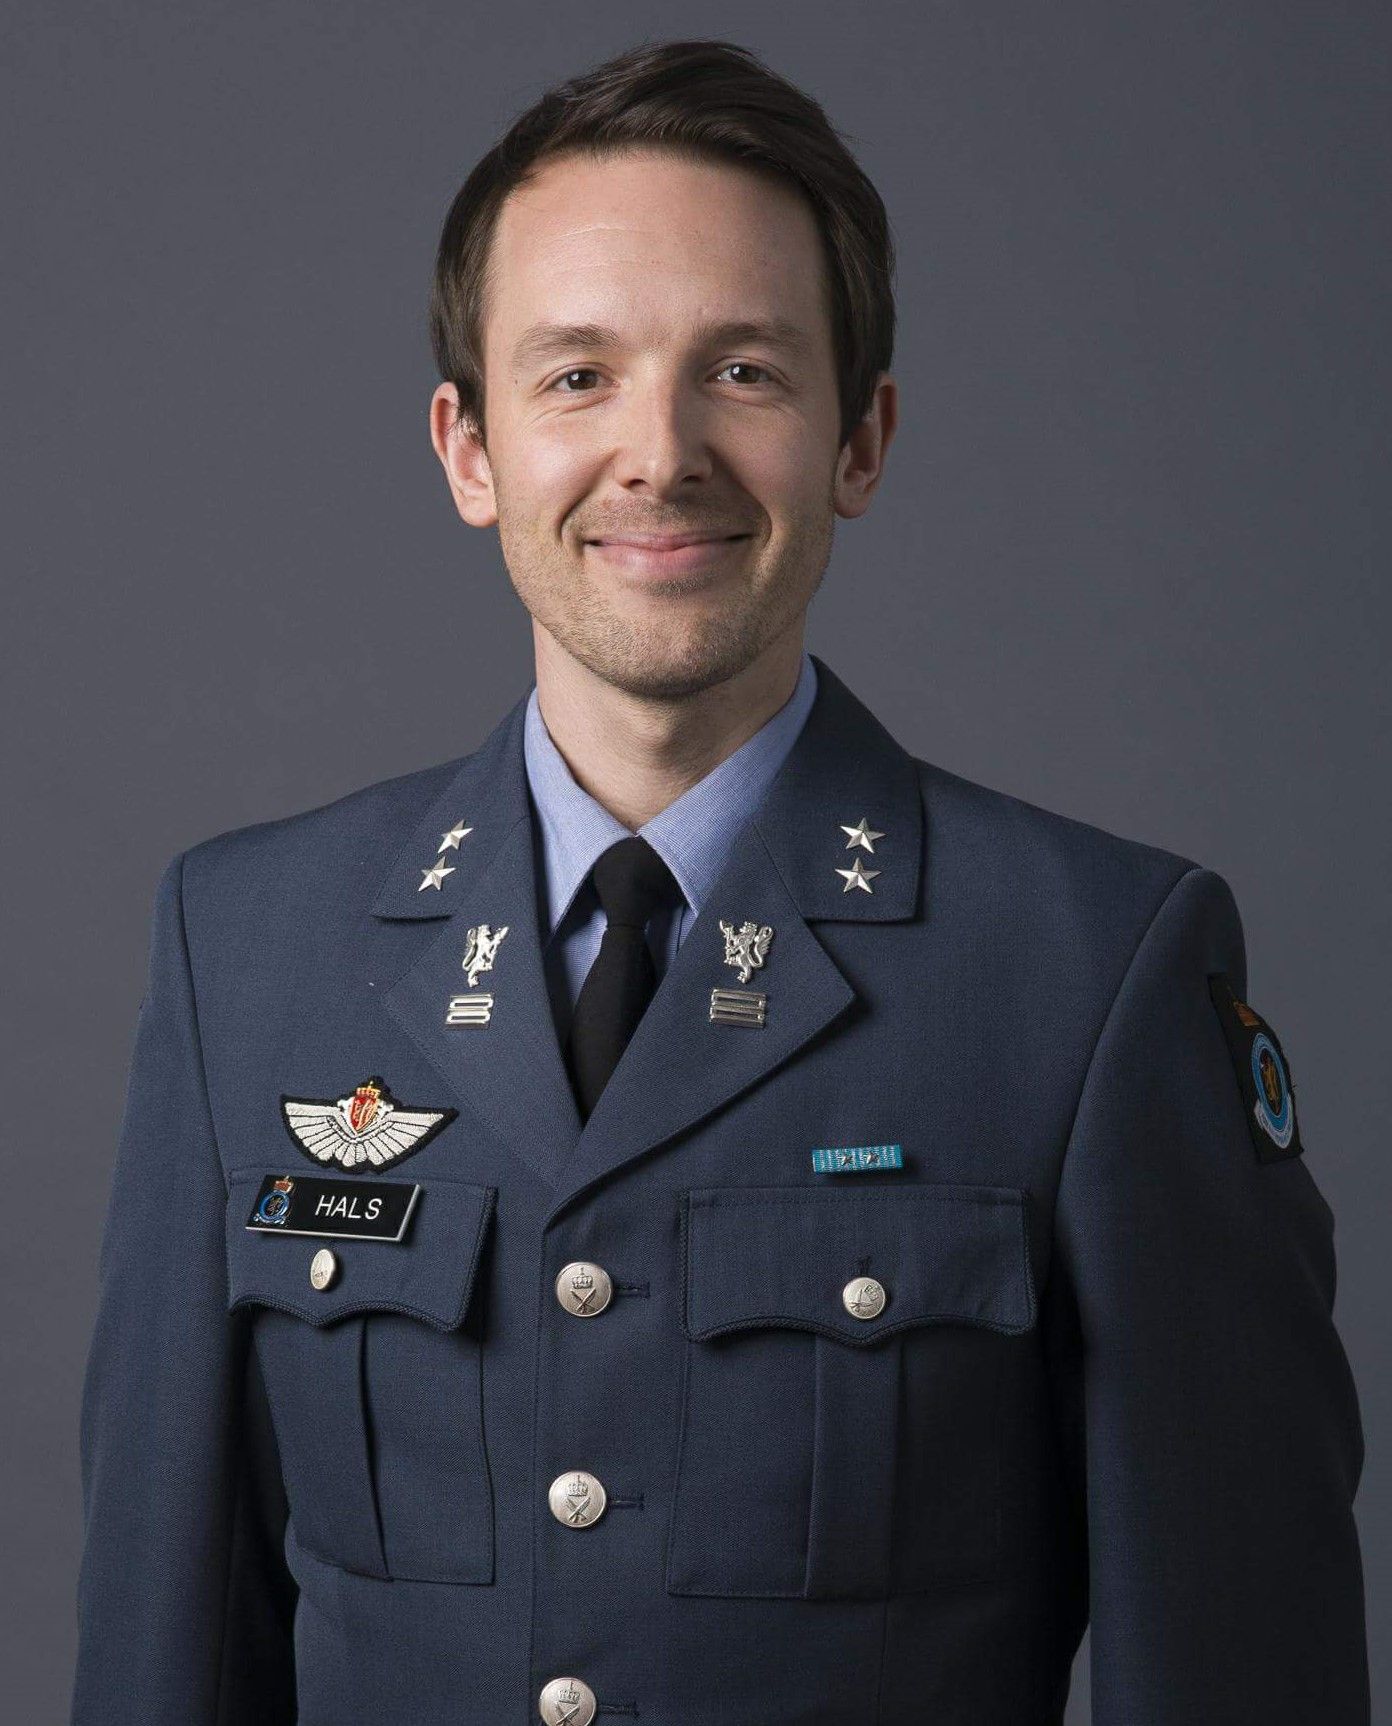 Erik Hals